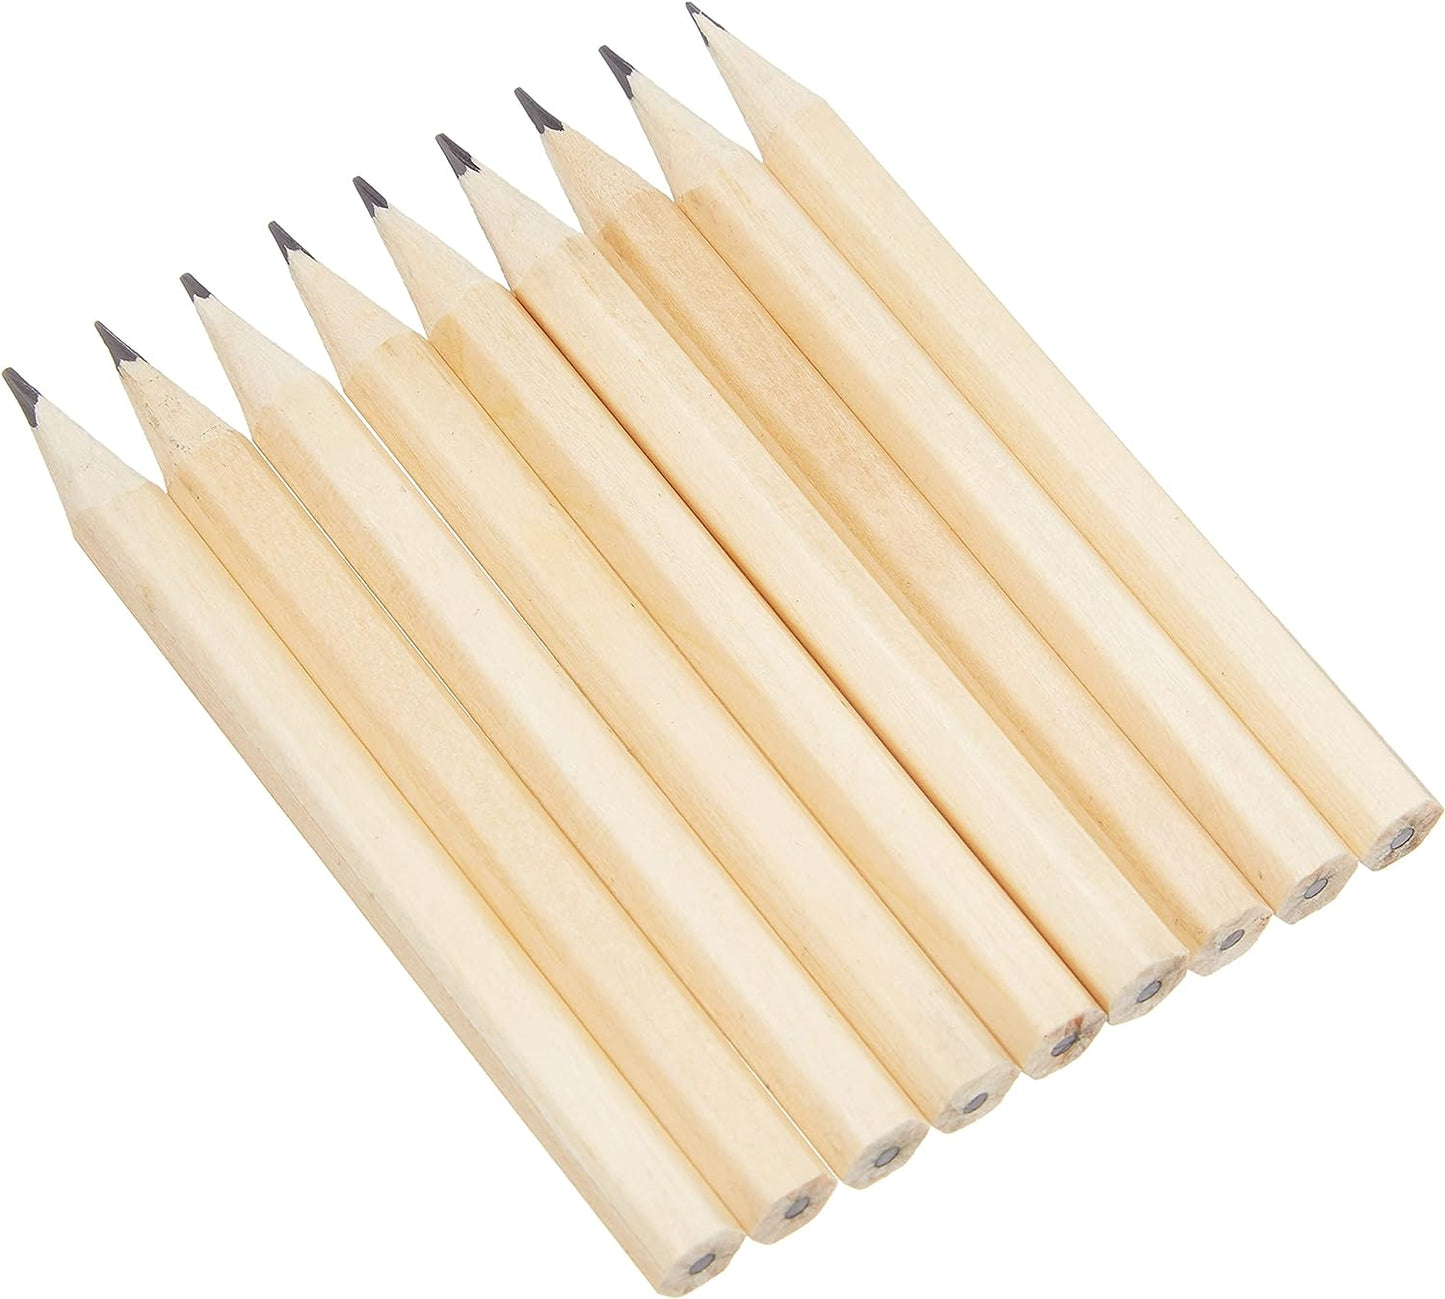 Pack of 144 Half Pencils